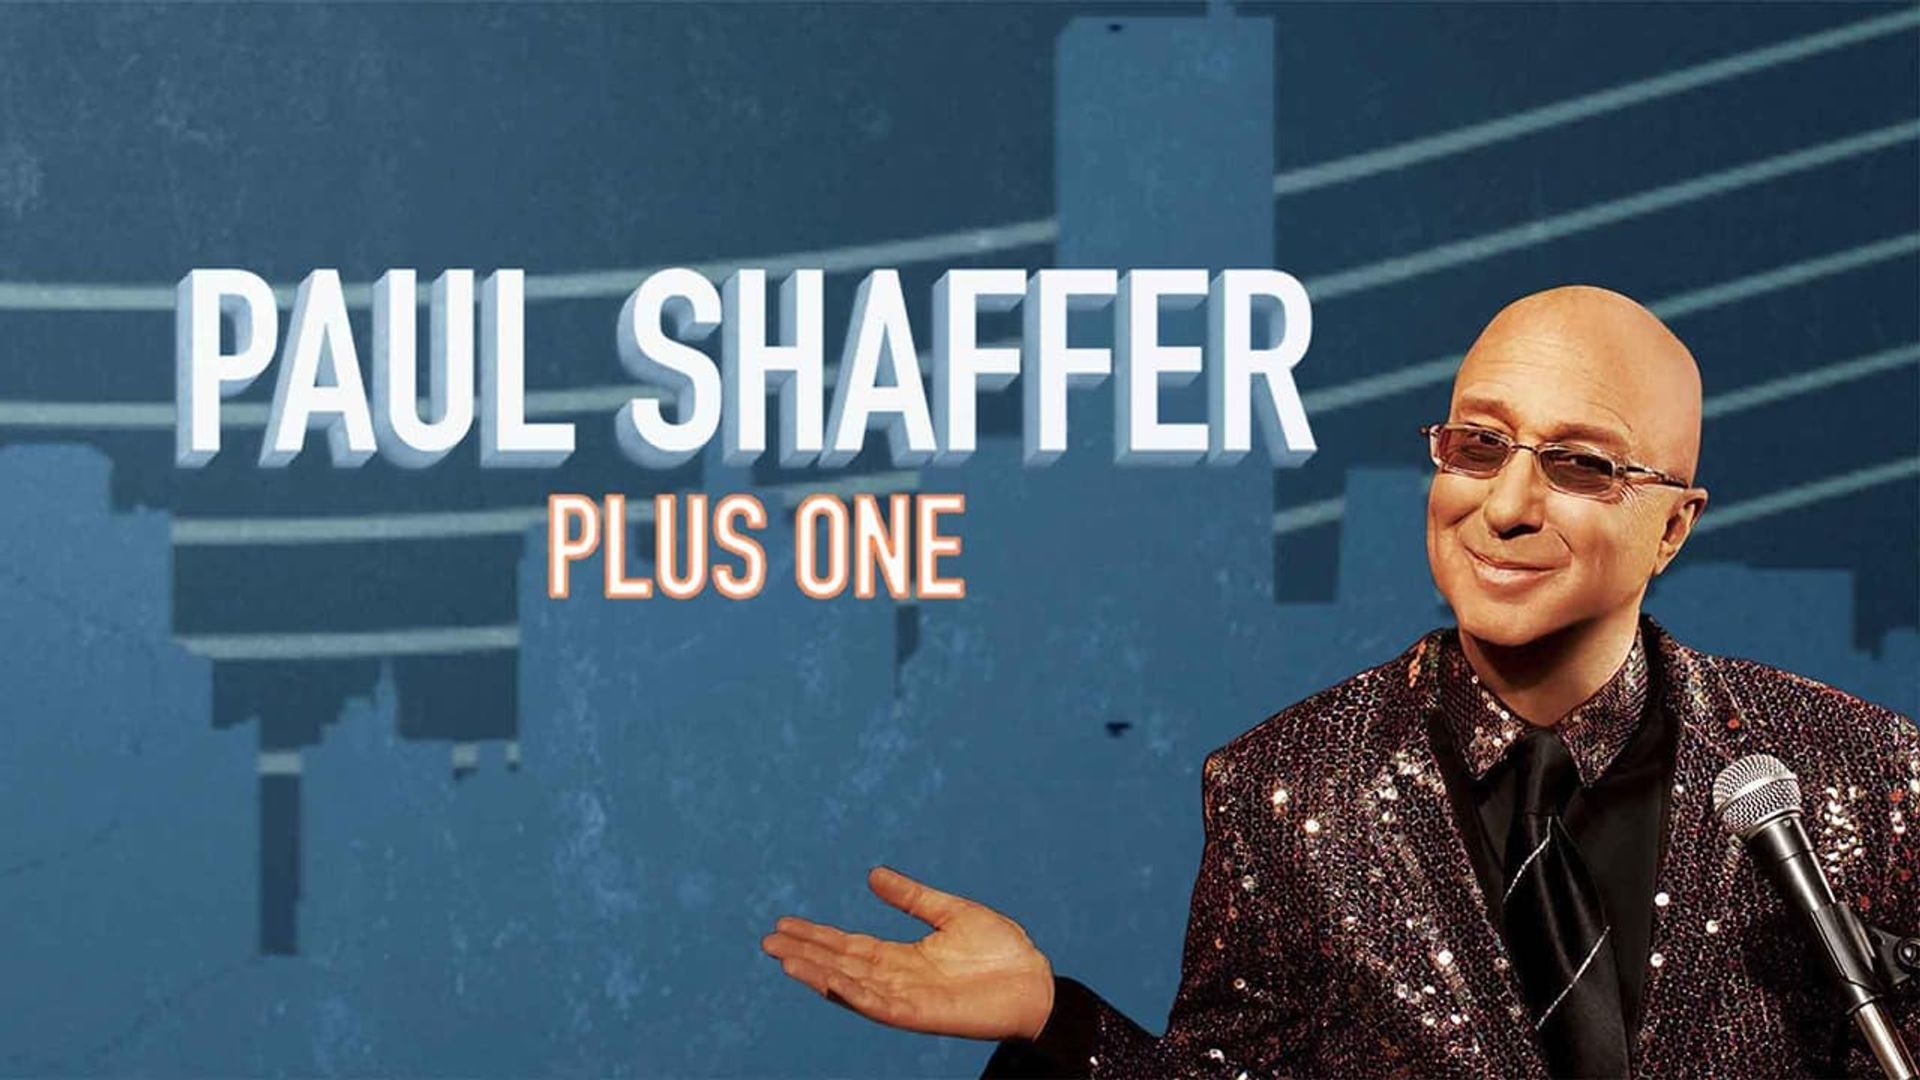 Paul Shaffer Plus One background